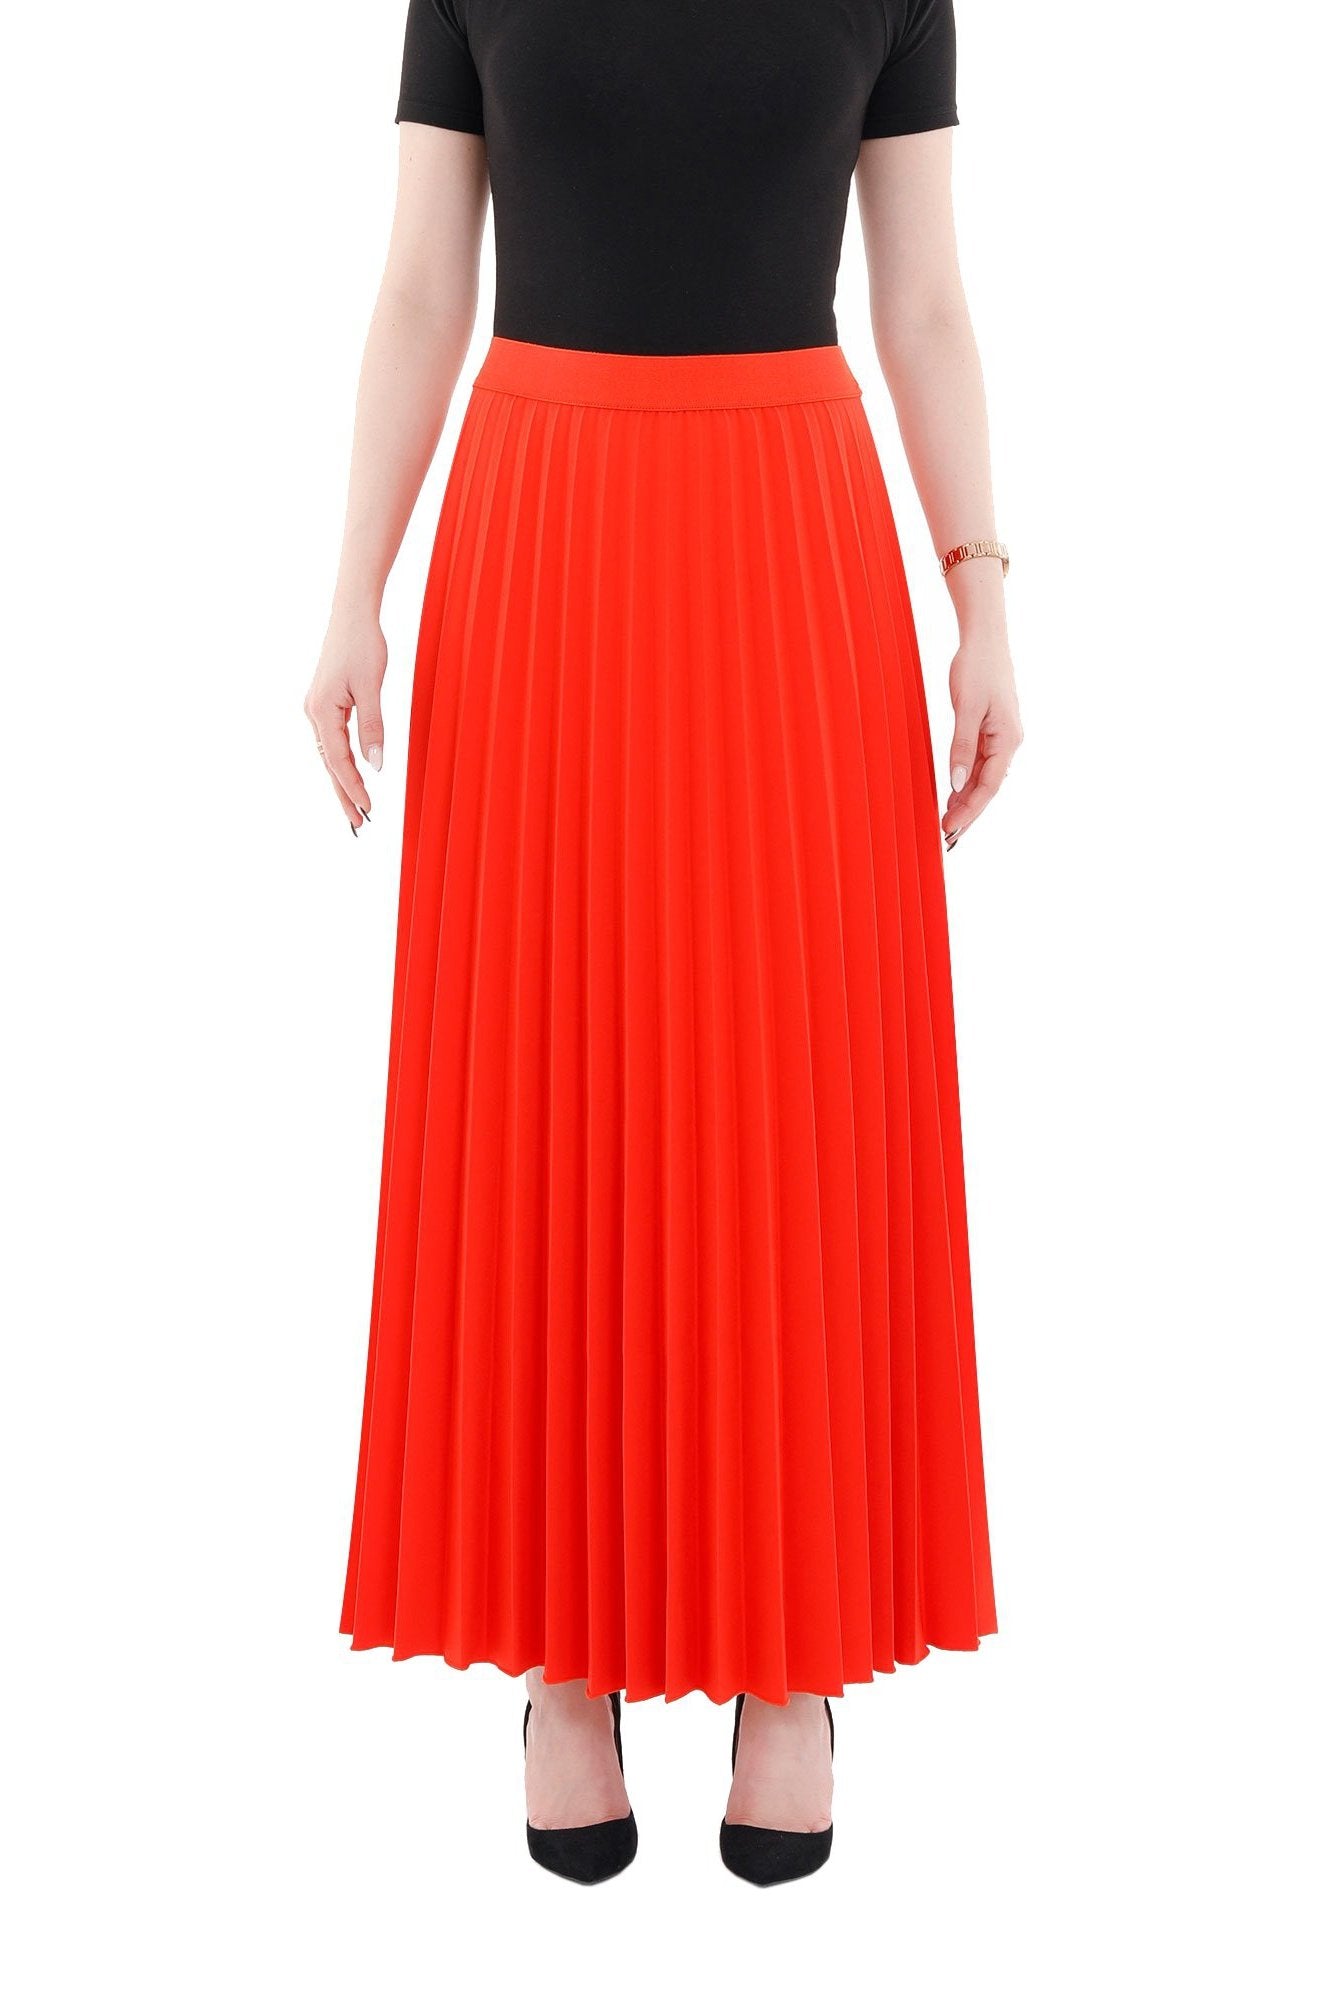 Coral Pleated Maxi Skirt Elastic Waist Band Ankle Length Plisse Skirt - G - Line